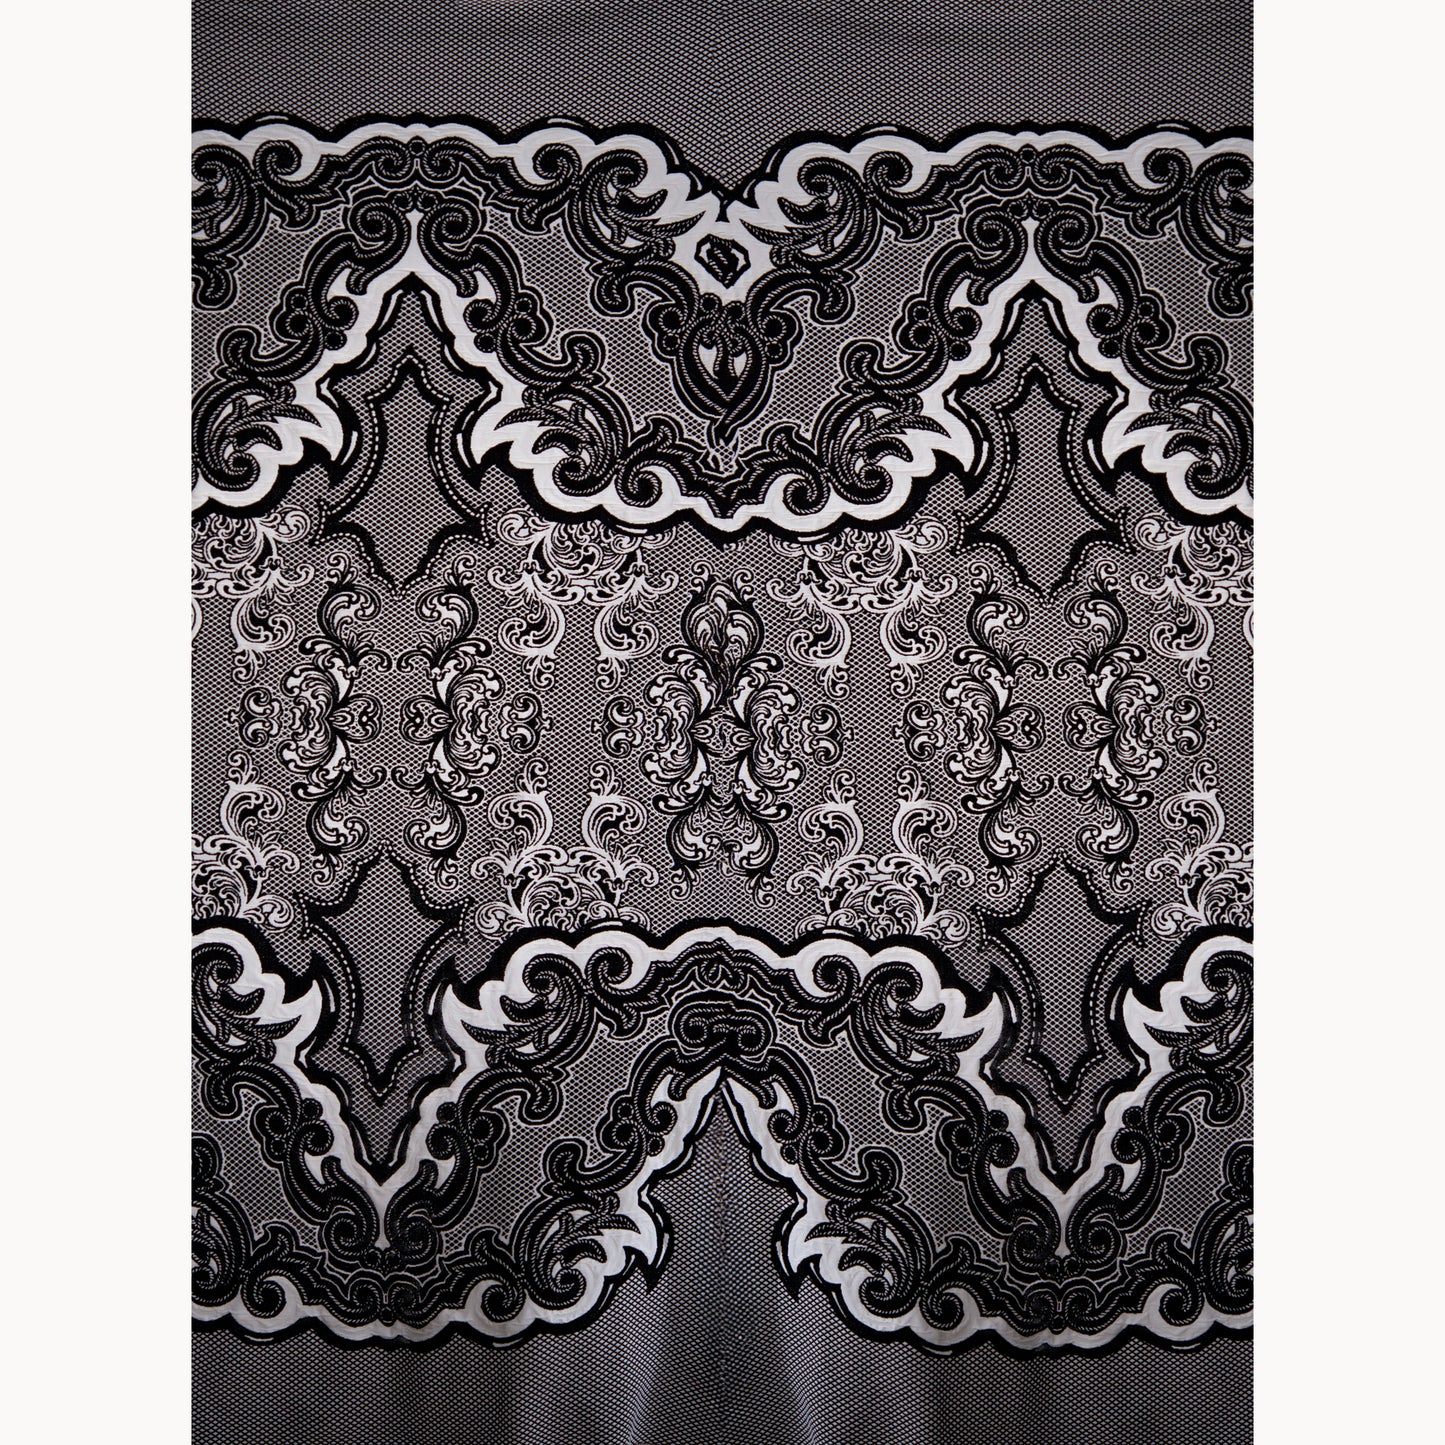 Textured knit - LÉA - Arabesques - Black / White